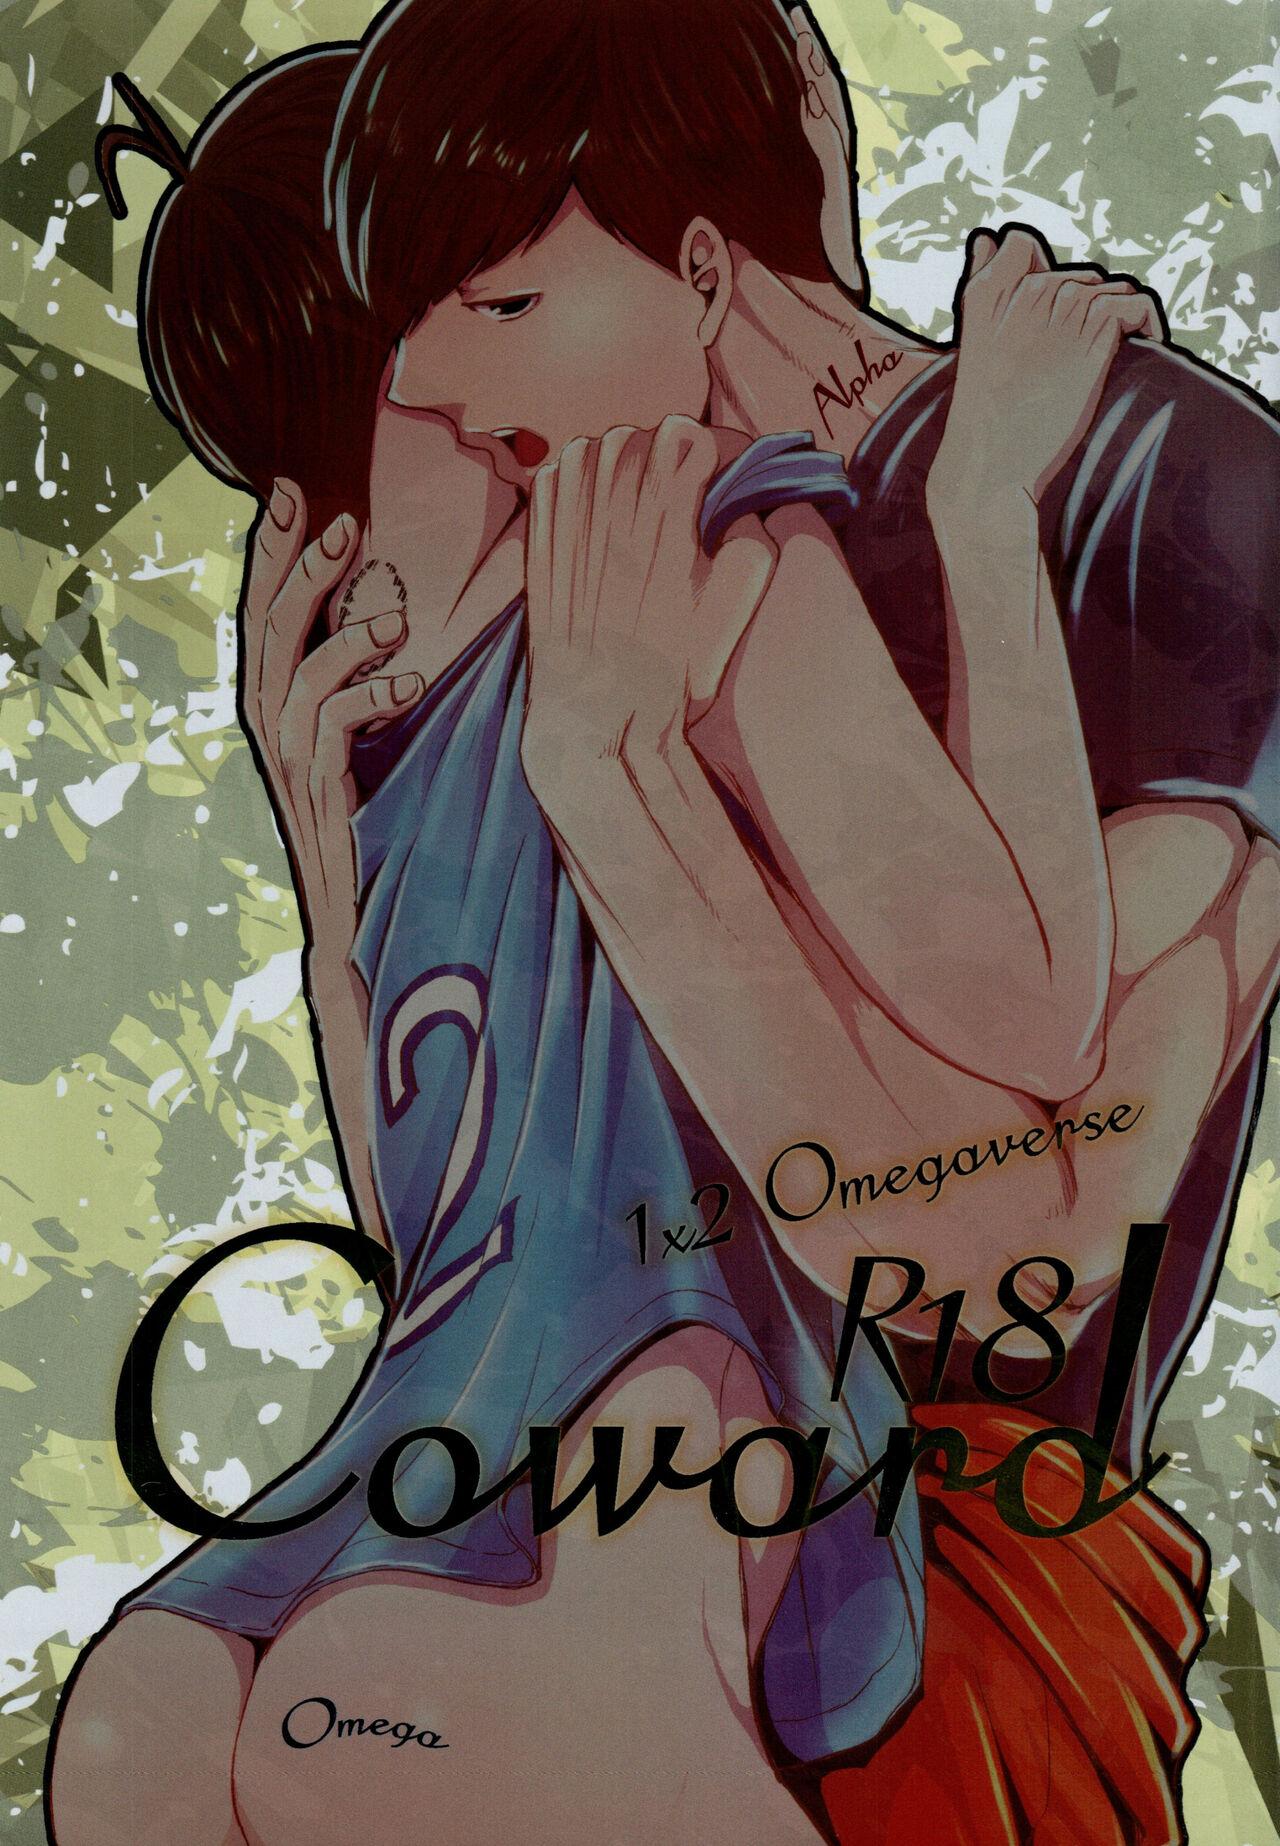 Coward [7575 (ナッゴーロ)] (おそ松さん) 0